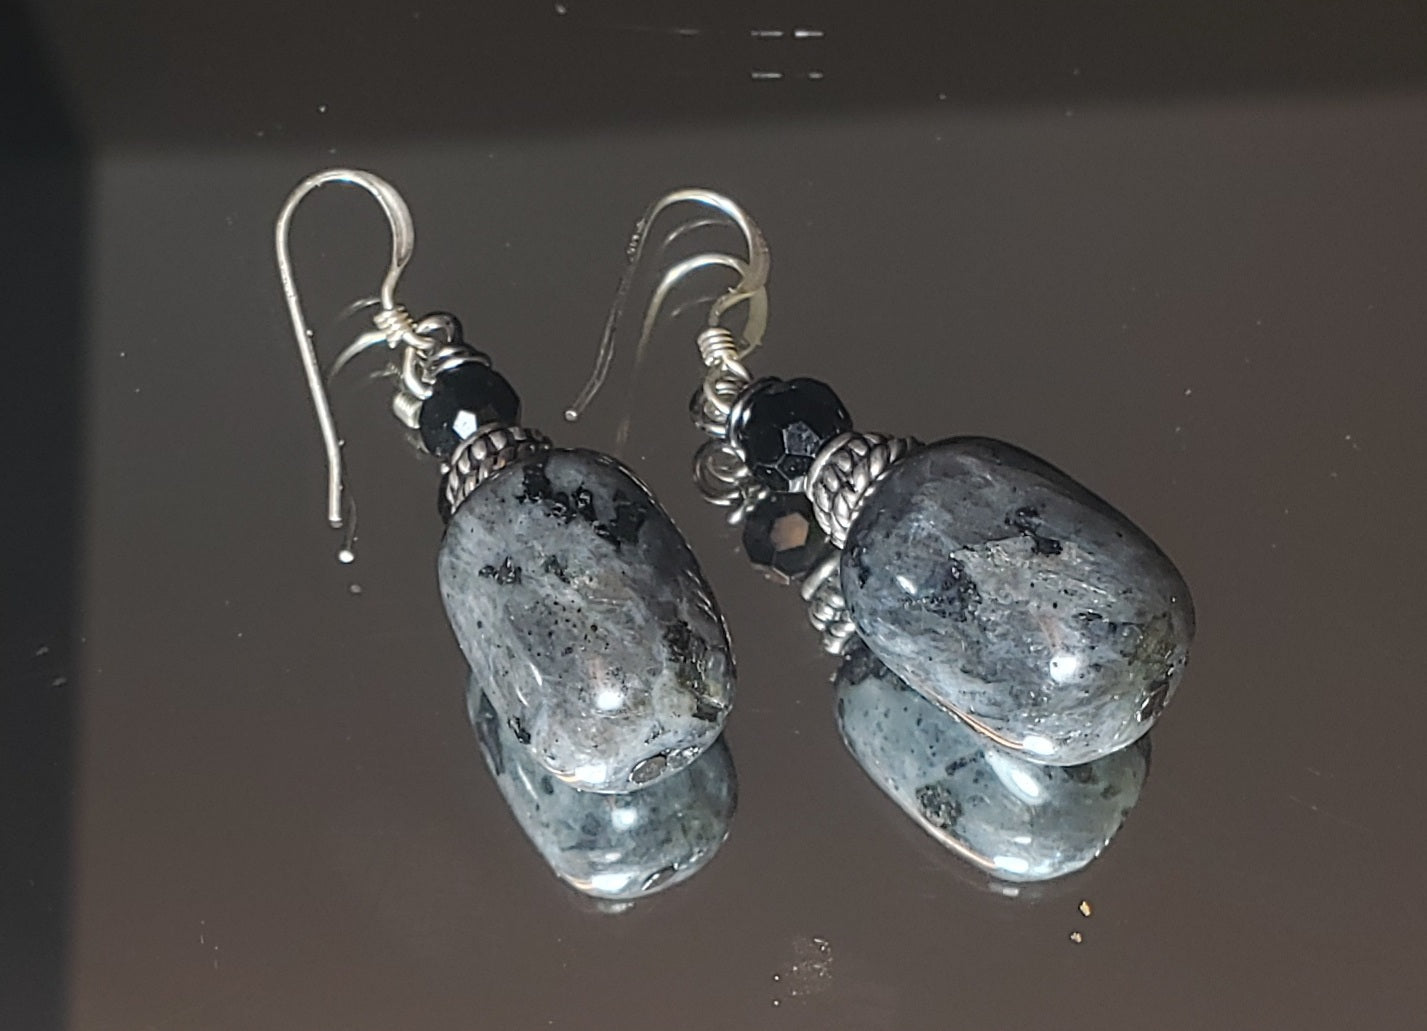 Black Labradorite Earrings, Larvikite Earrings